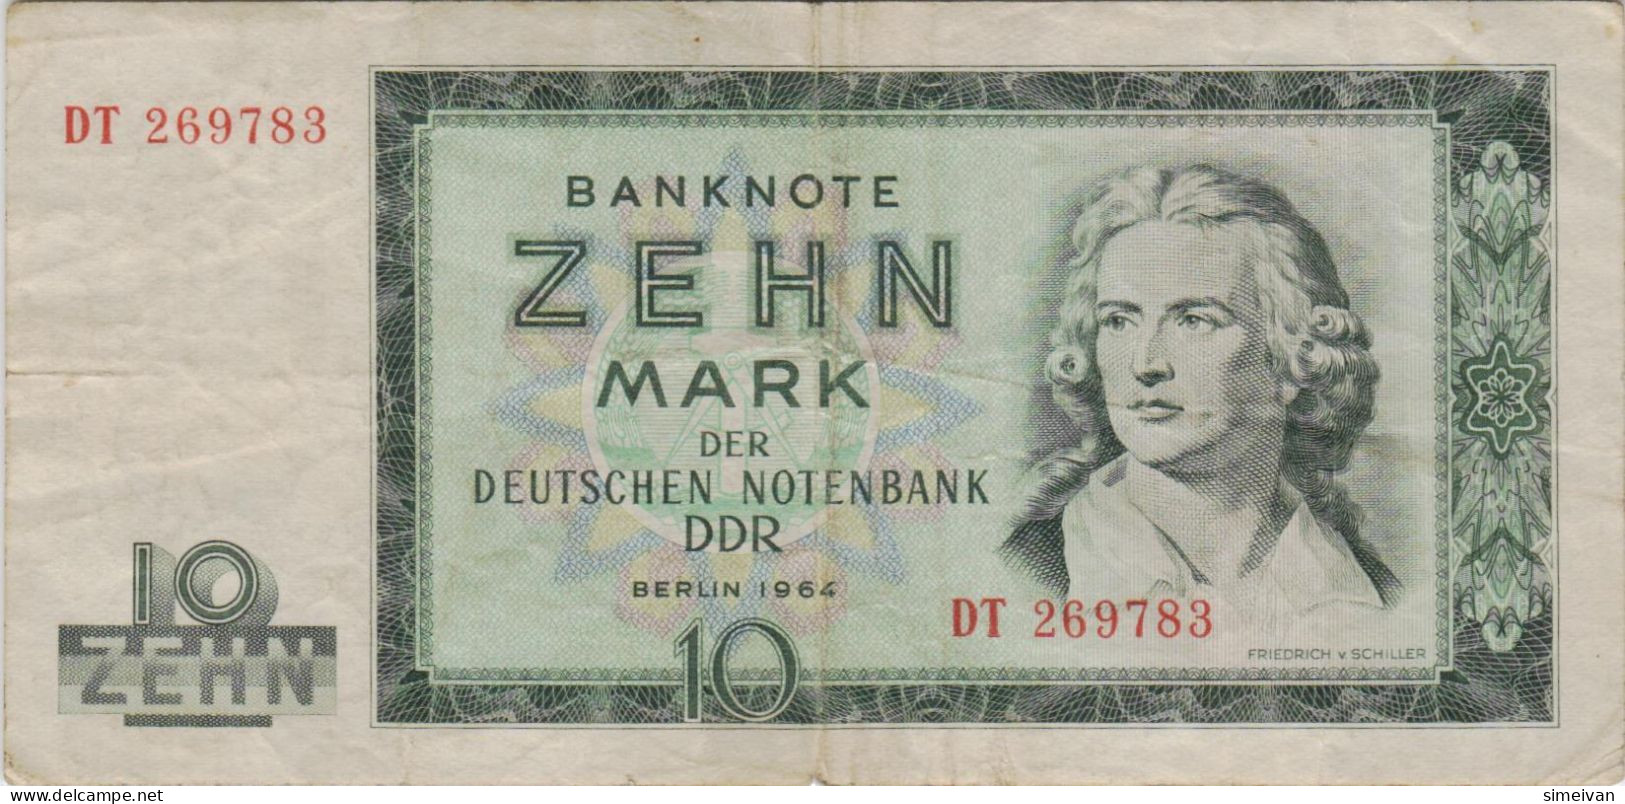 Germany Democratic Republic 10 Mark 1964 P-23a DDR East Germany Replacement Banknote Deutschland Allemagne #5080 - 10 Deutsche Mark